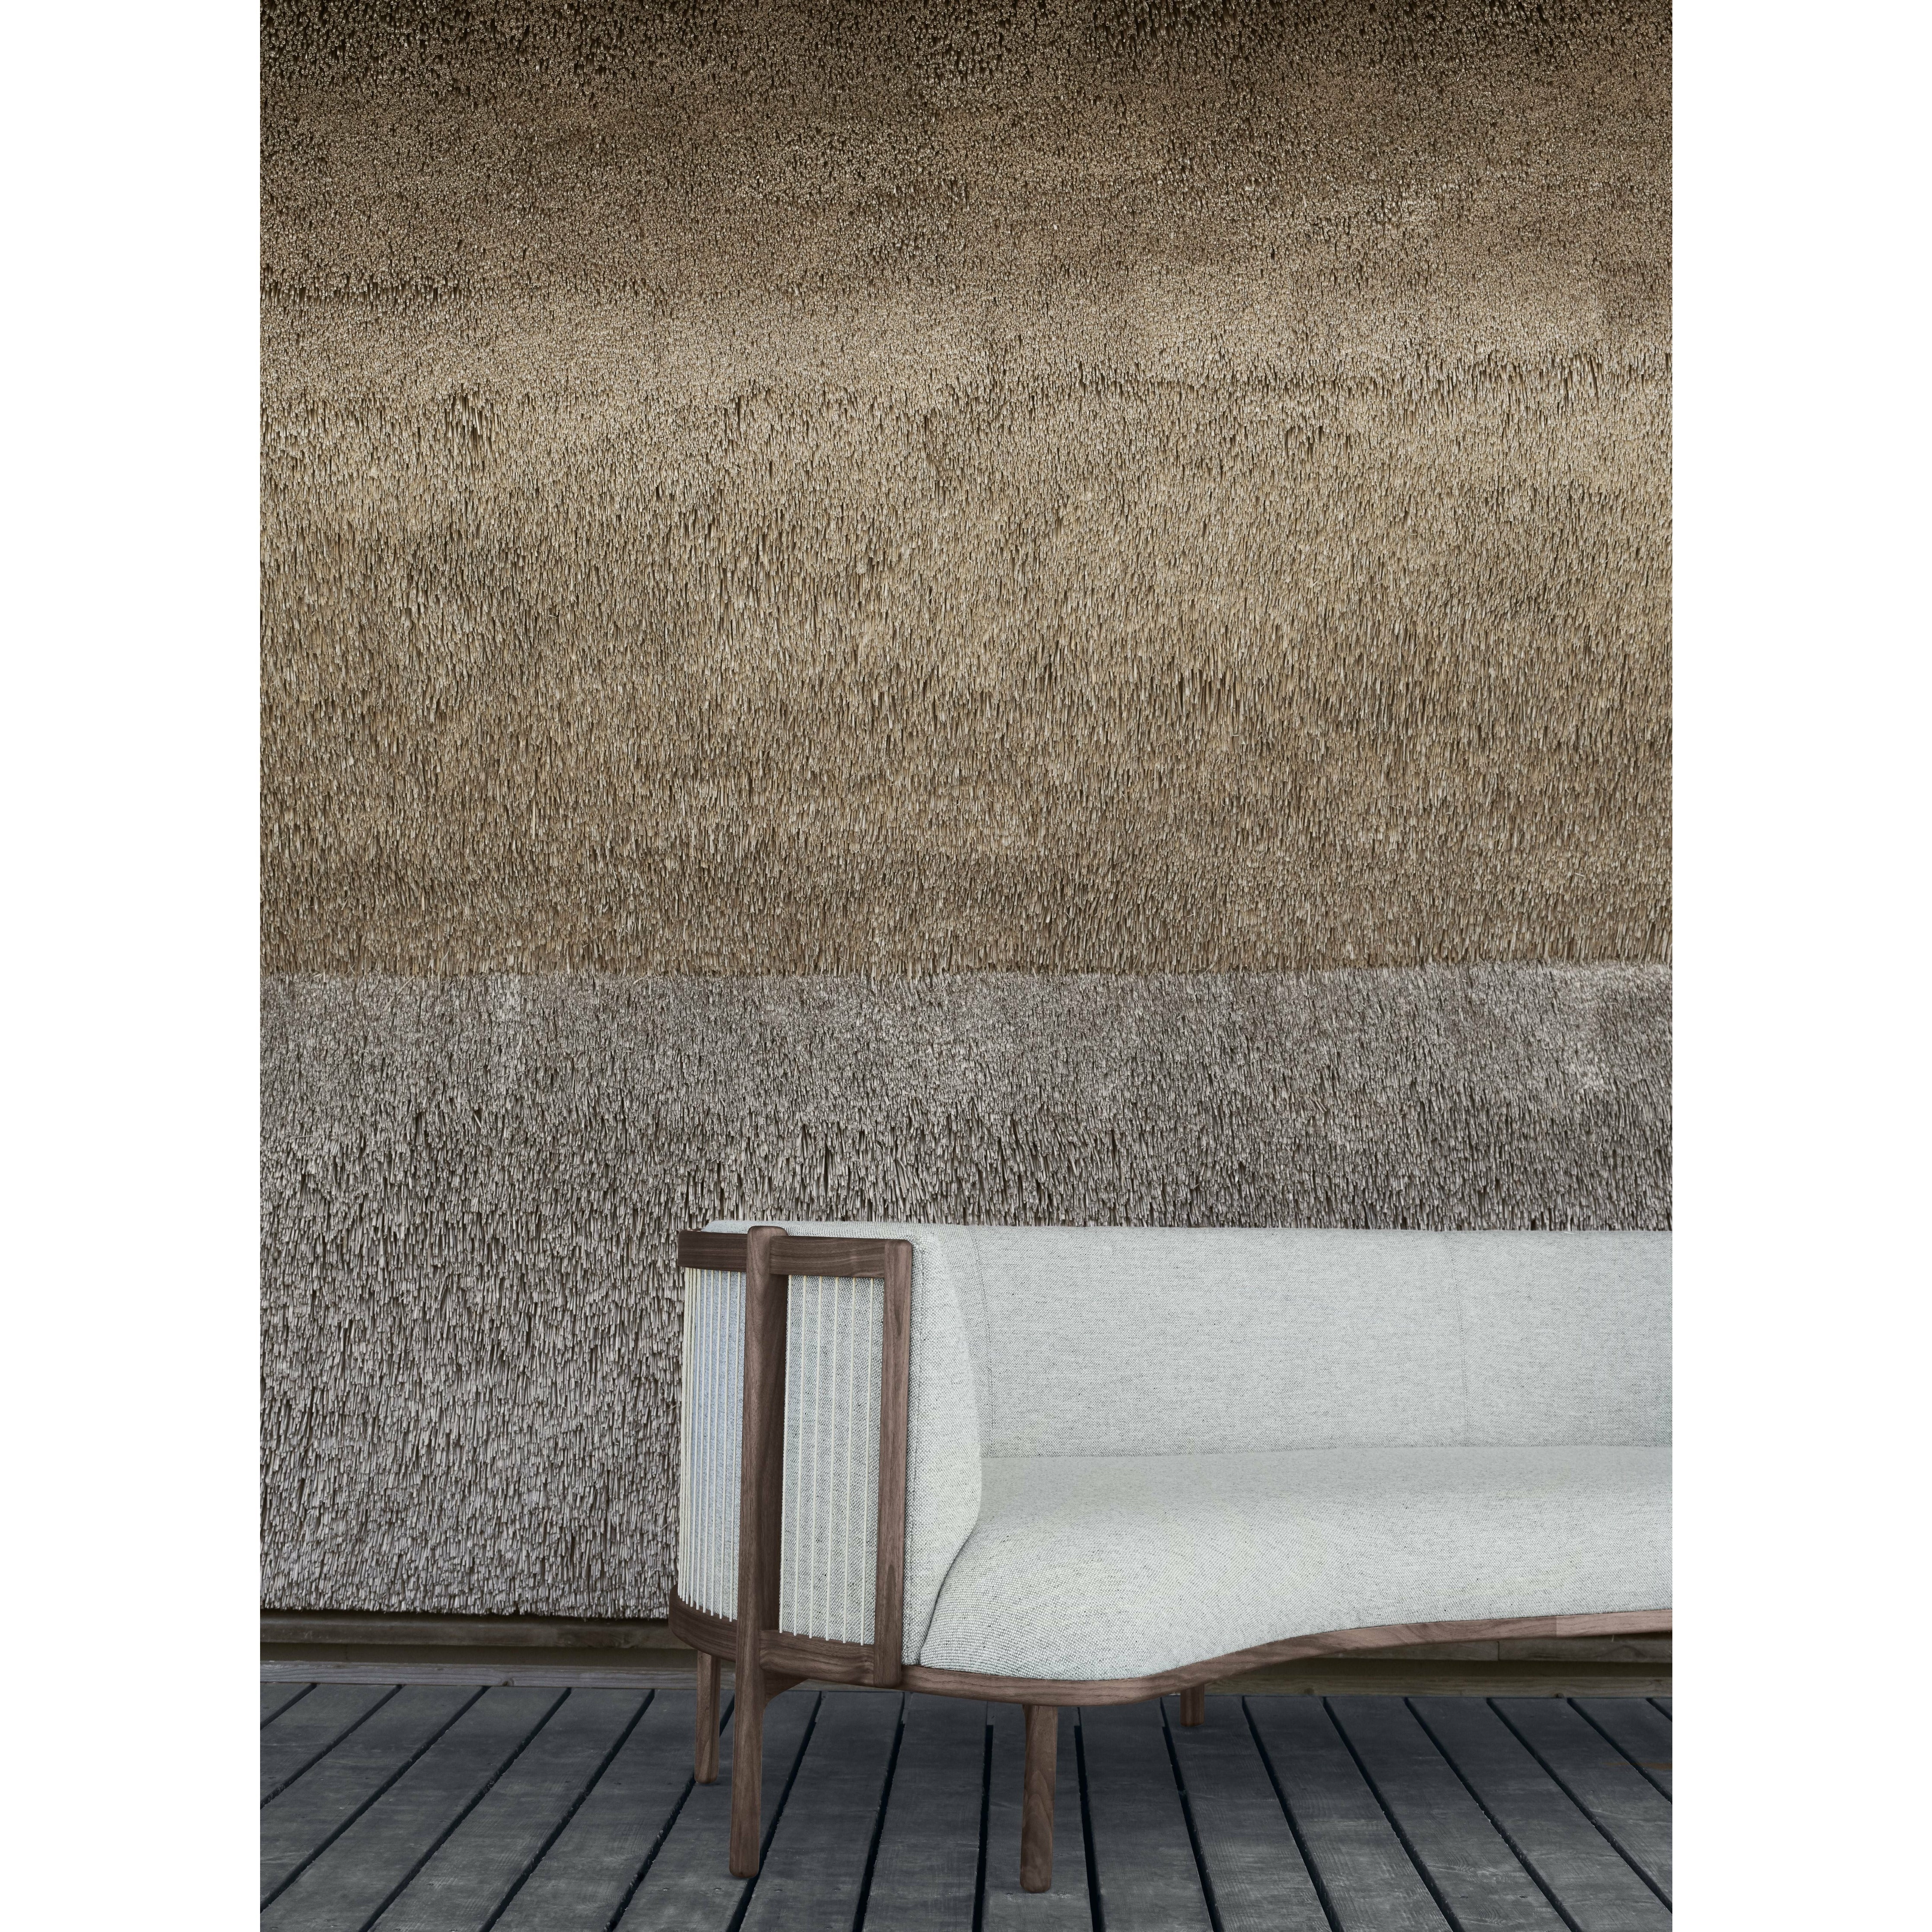 Carl Hansen RF1903 R Sideways Sofa 3 plazas de roble derecho/tela de fiord, gris/marrón natural